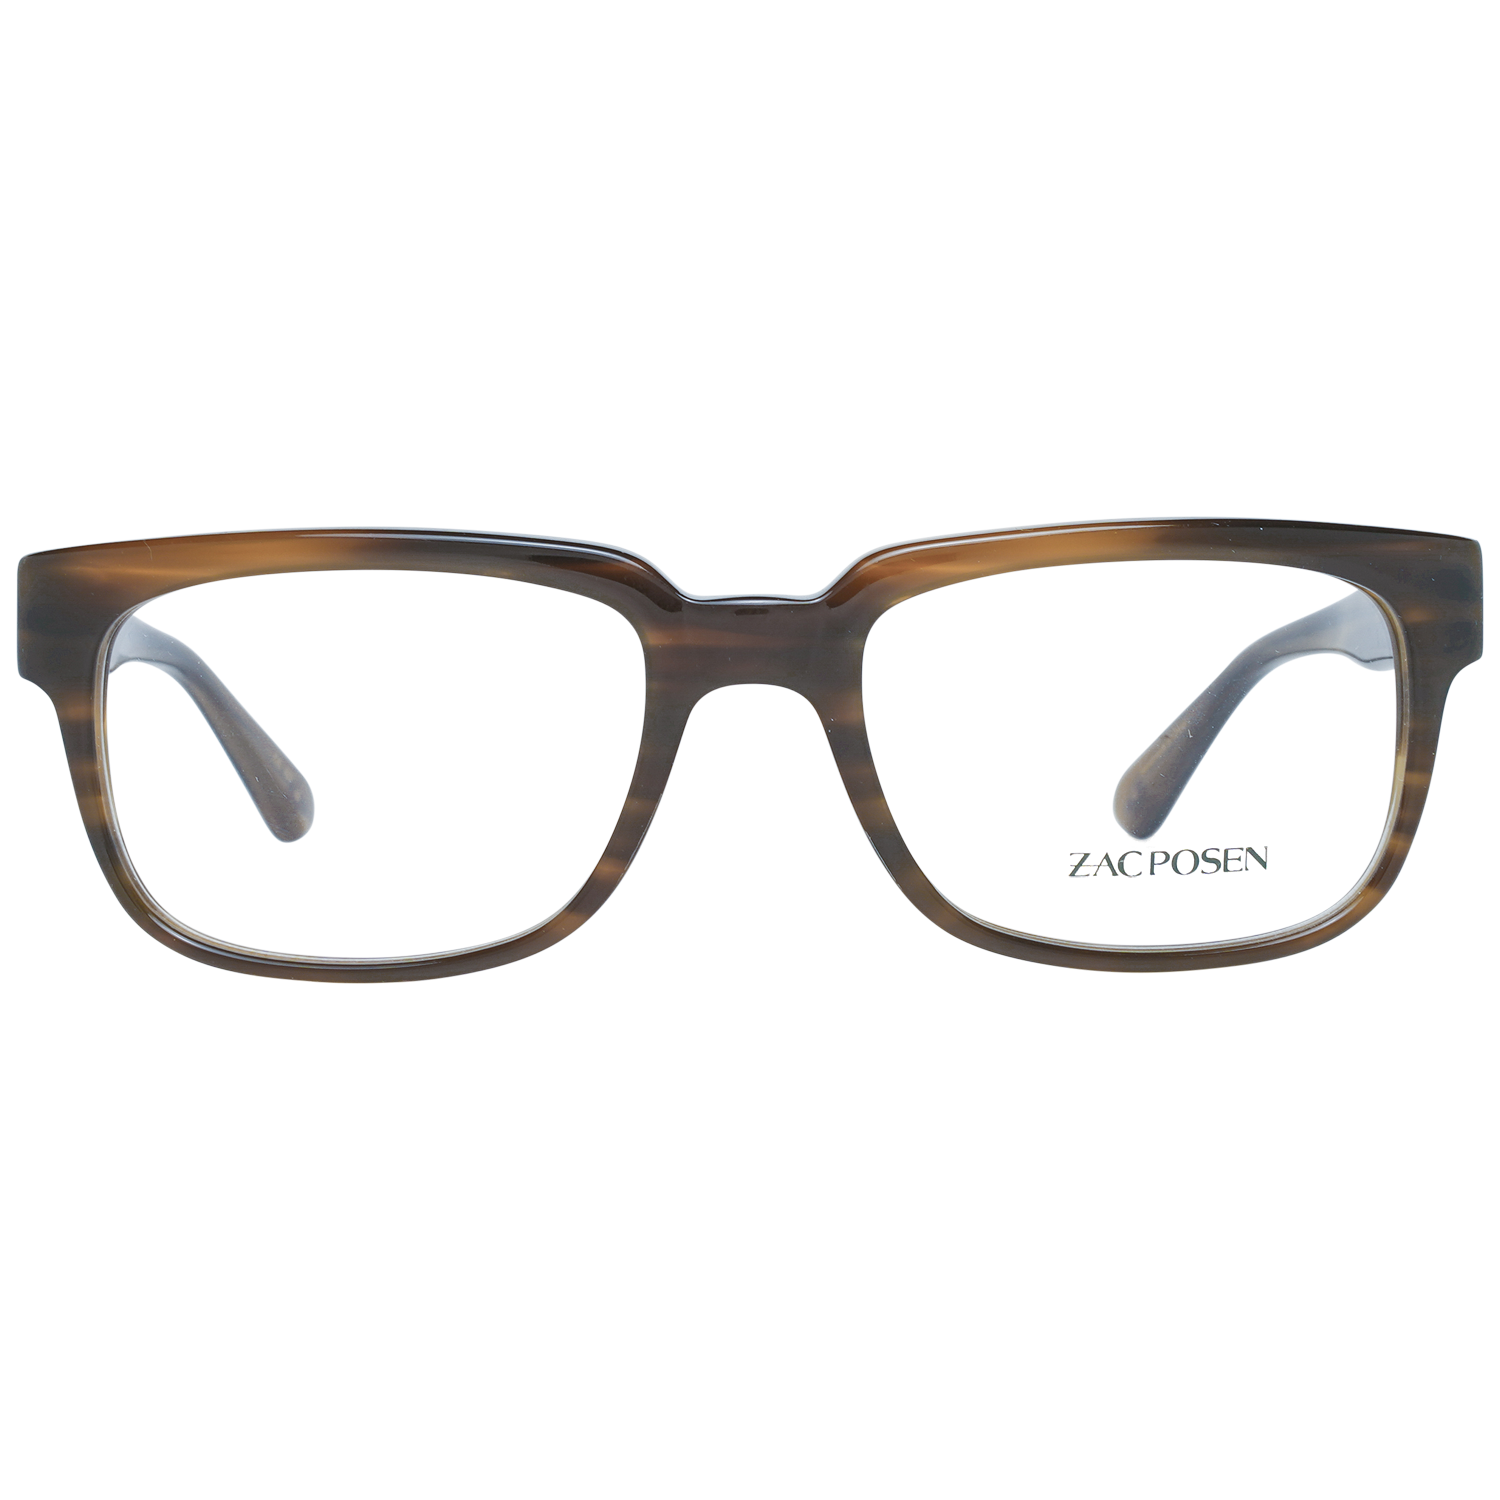 Zac Posen Frames Zac Posen Optical Frame ZTEC OL 53 Tech Eyeglasses Eyewear UK USA Australia 